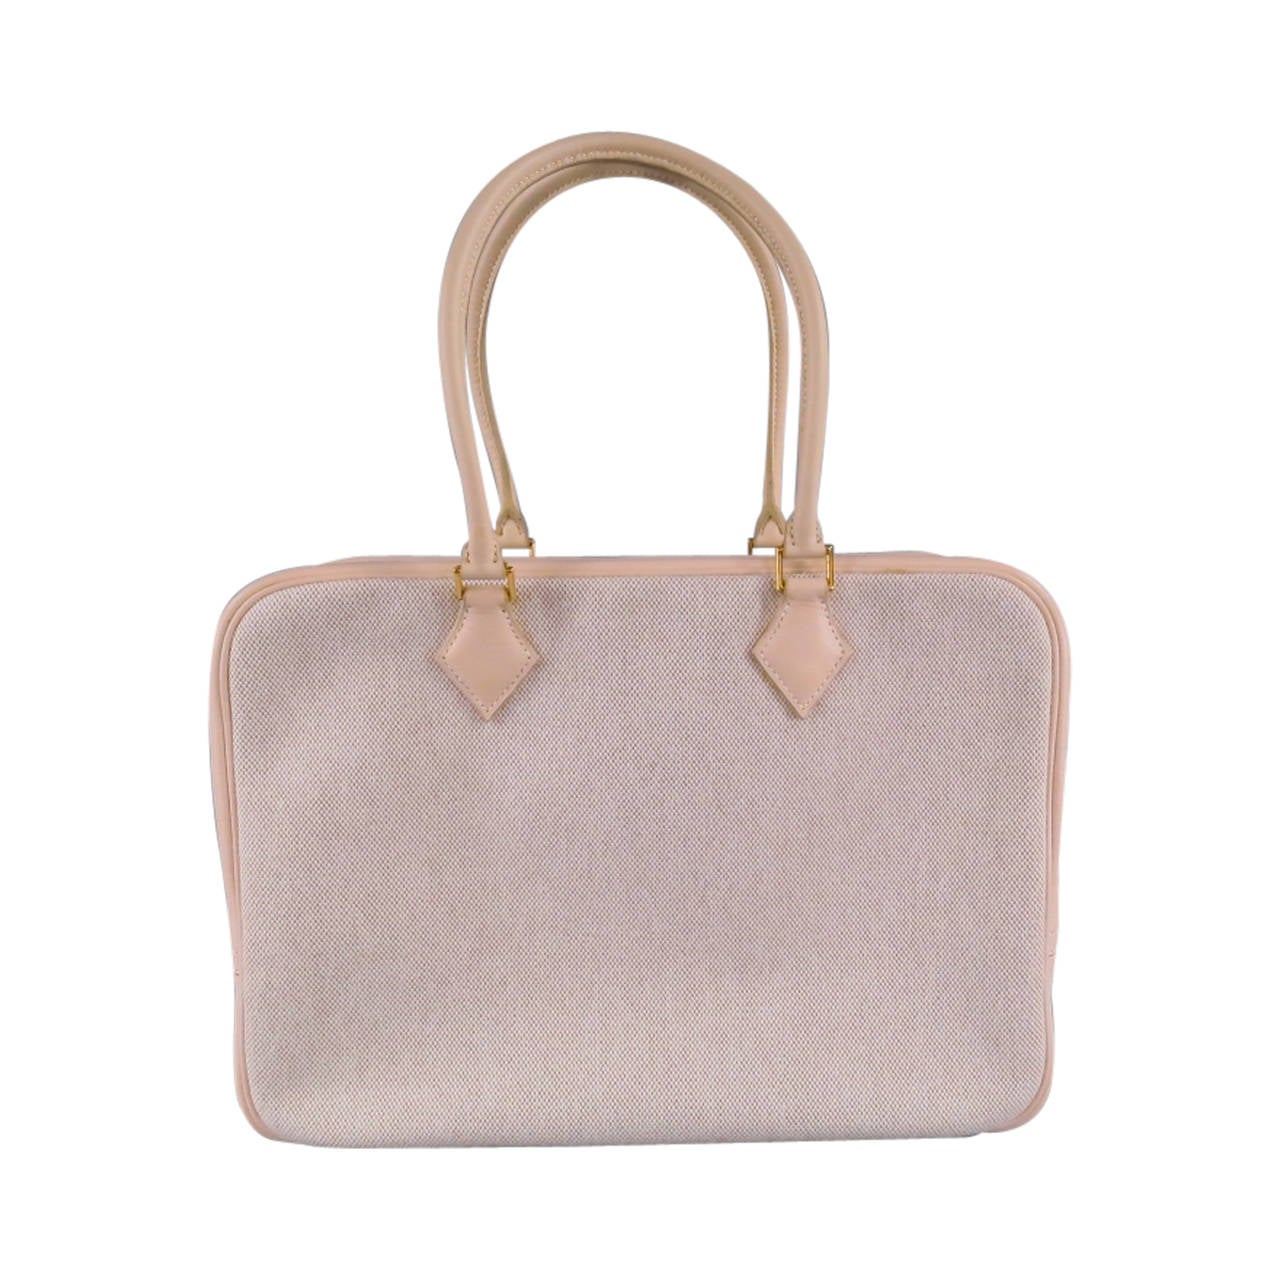 HERMES -Plume 32- Beige Leather Top Handles Canvas Handbag at 1stdibs  